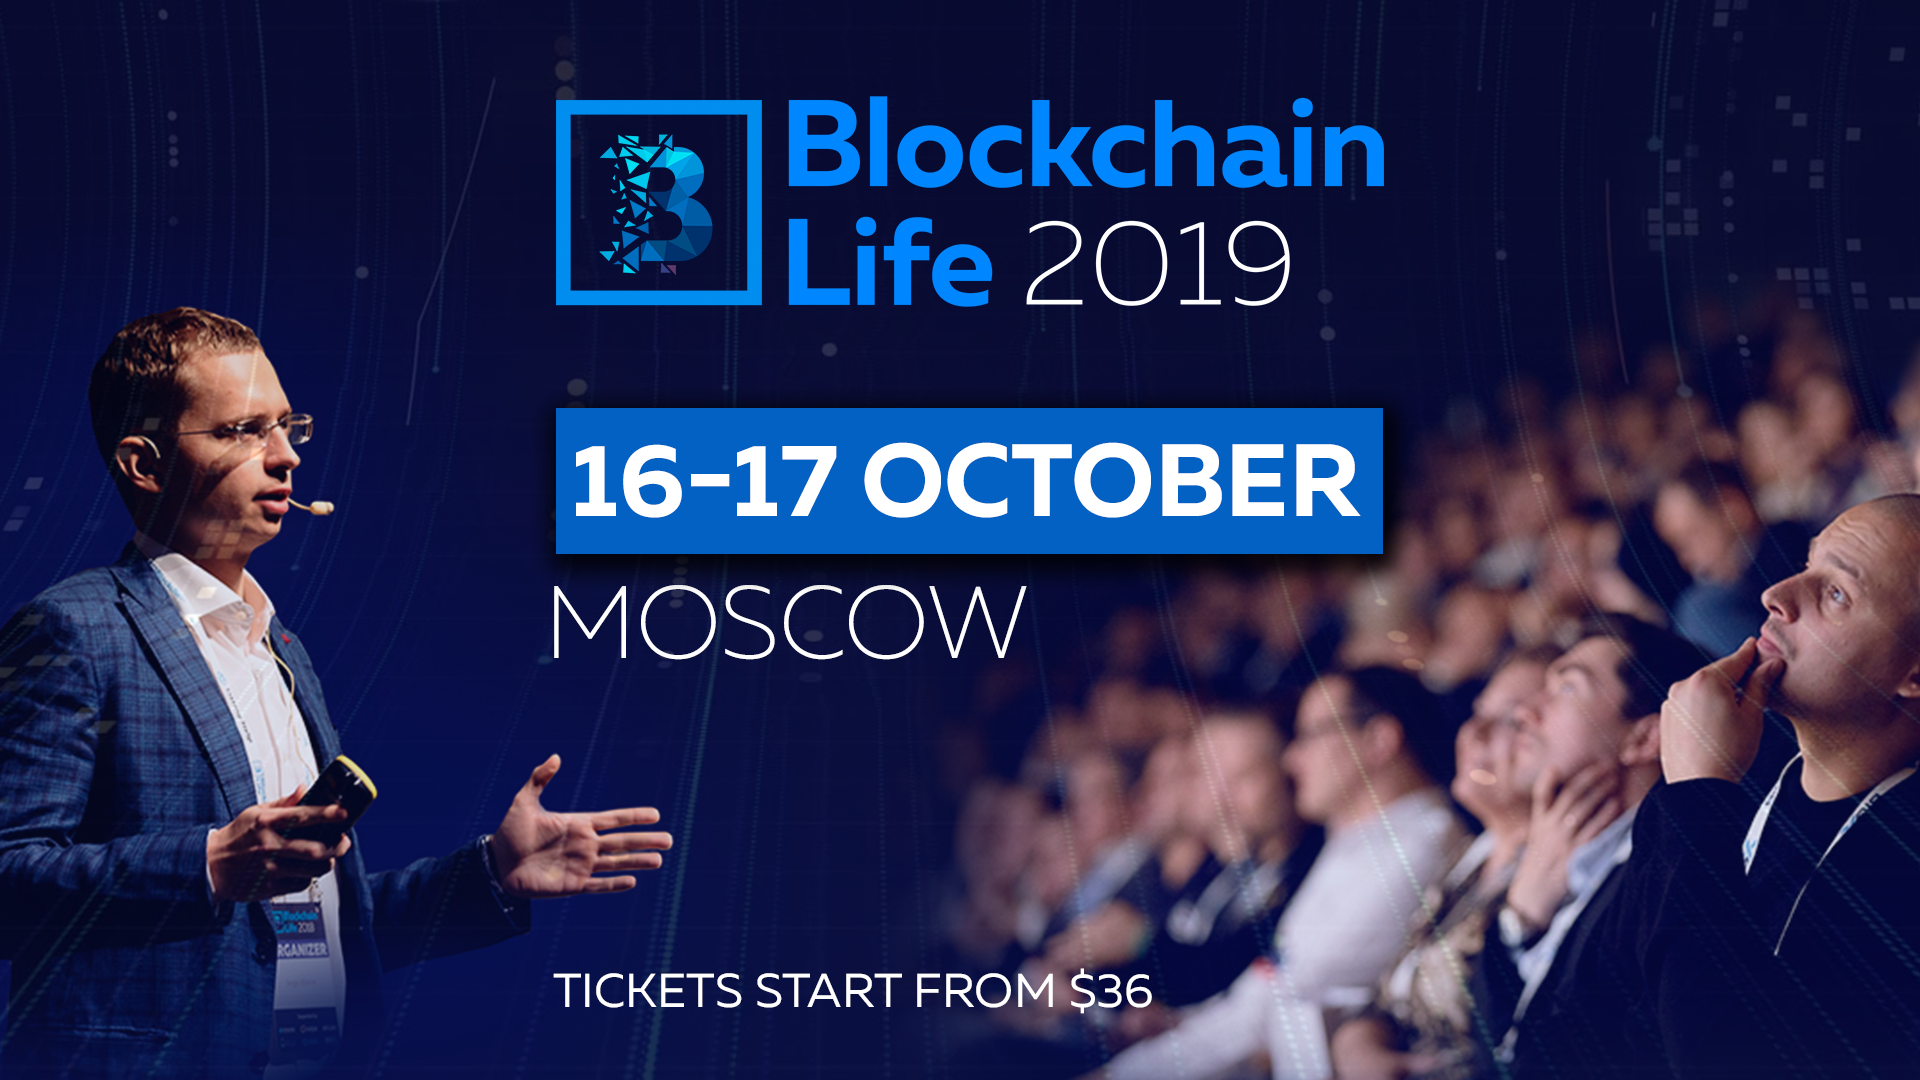 Blockchain Life event news